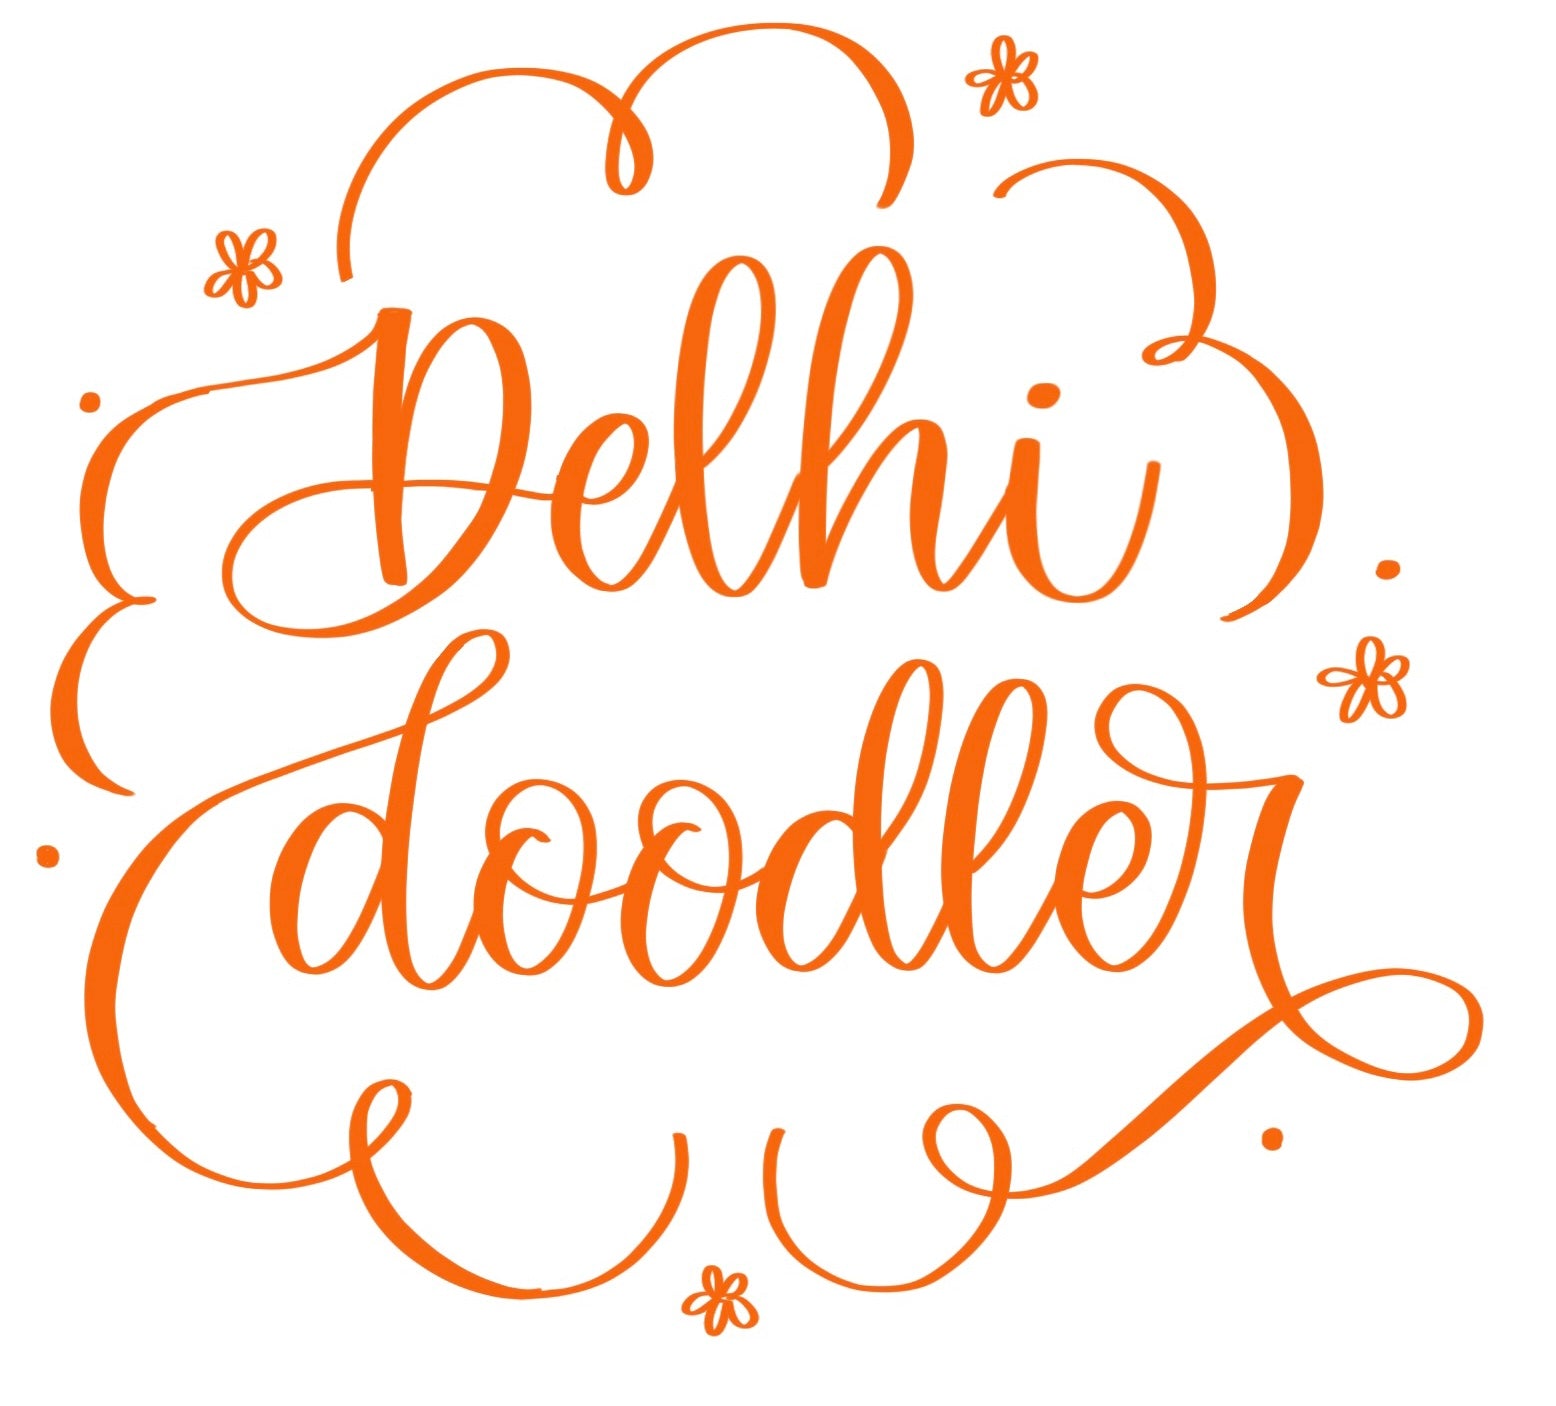 Delhi Doodler